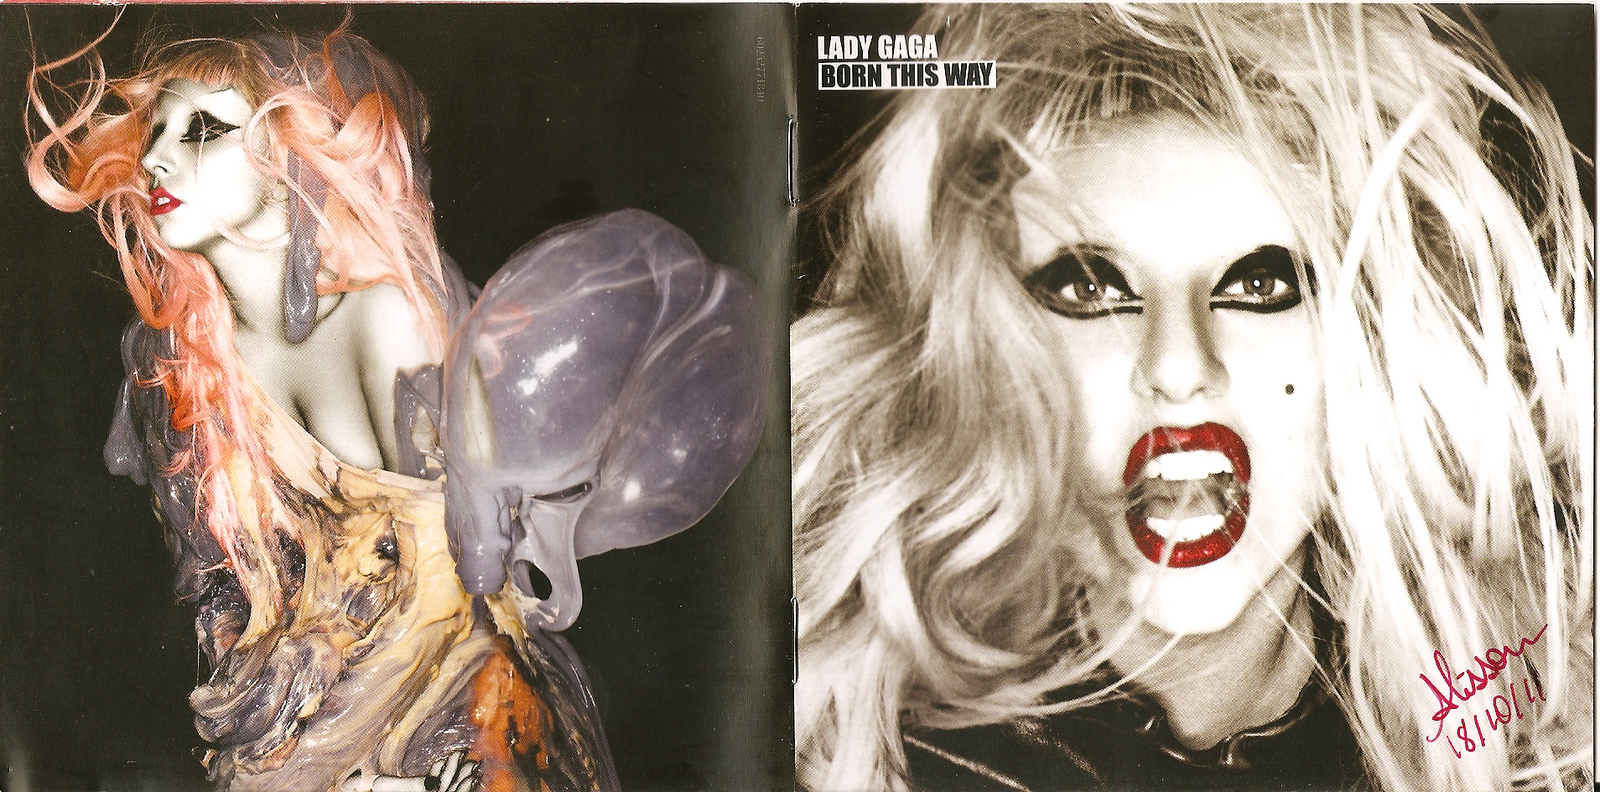 Lady gaga born this. Леди Гага Борн ЗИС Вэй. Леди Гага эры. Леди Гага альбомы. Lady Gaga born this way album.